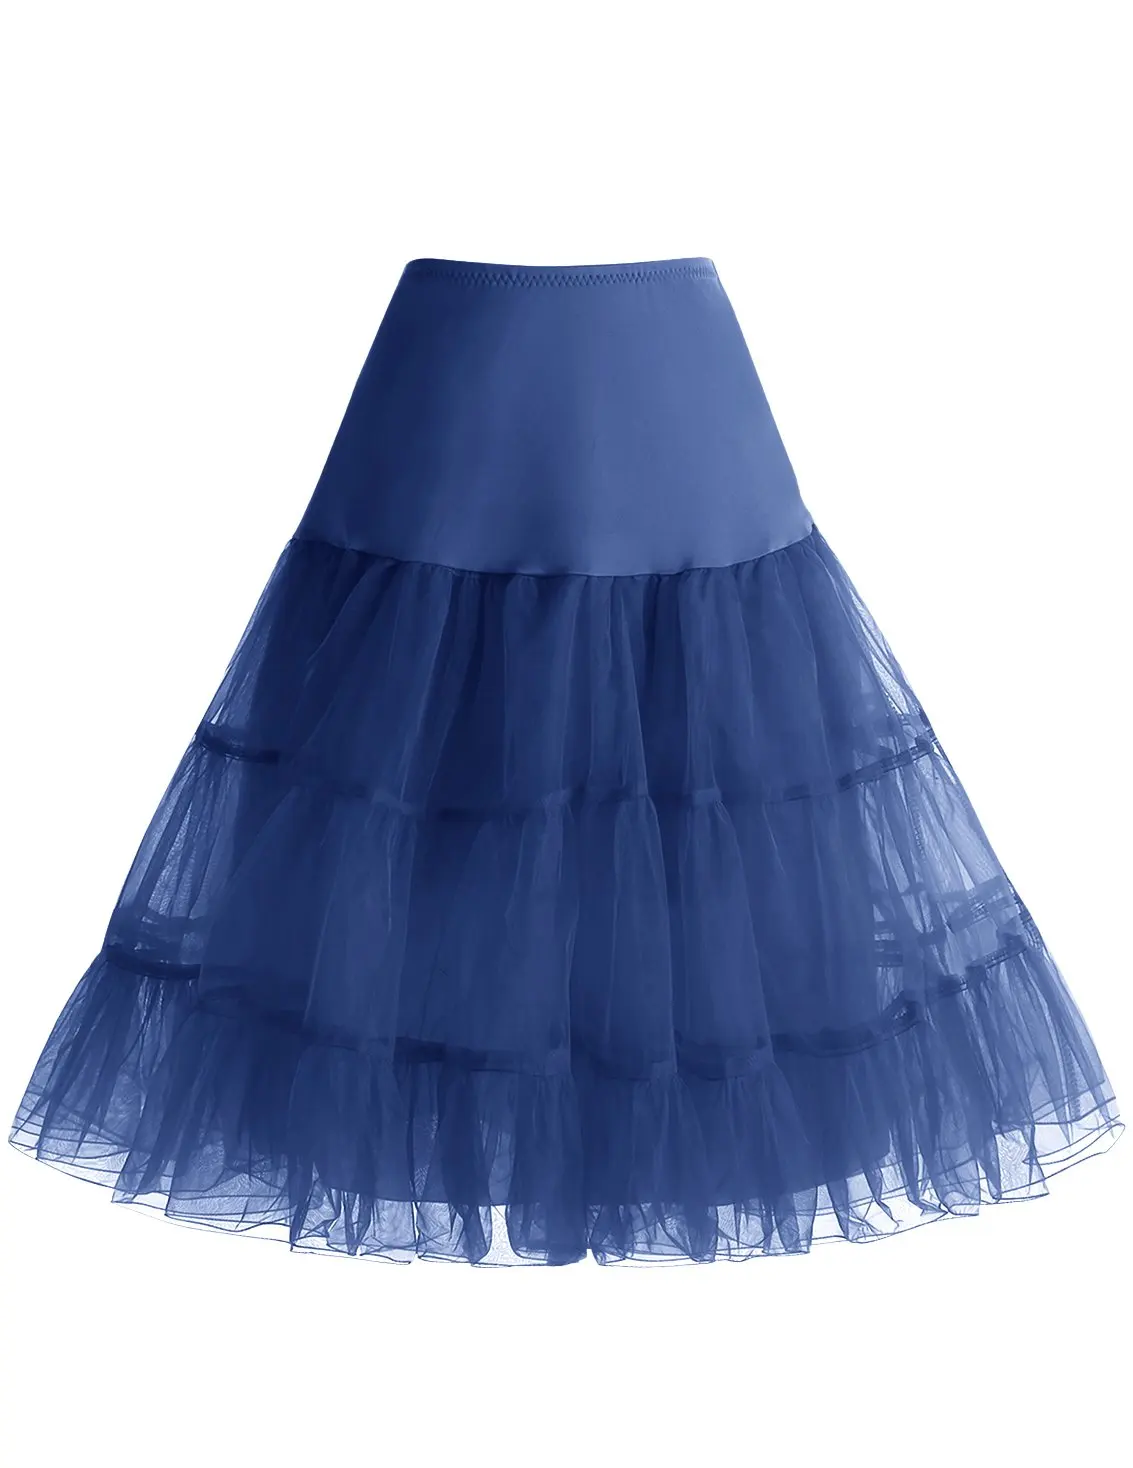 

Sensual Looking Fancy Clingy Women's 50s Petticoat Skirt Vintage Tutu Crinoline Underskirt